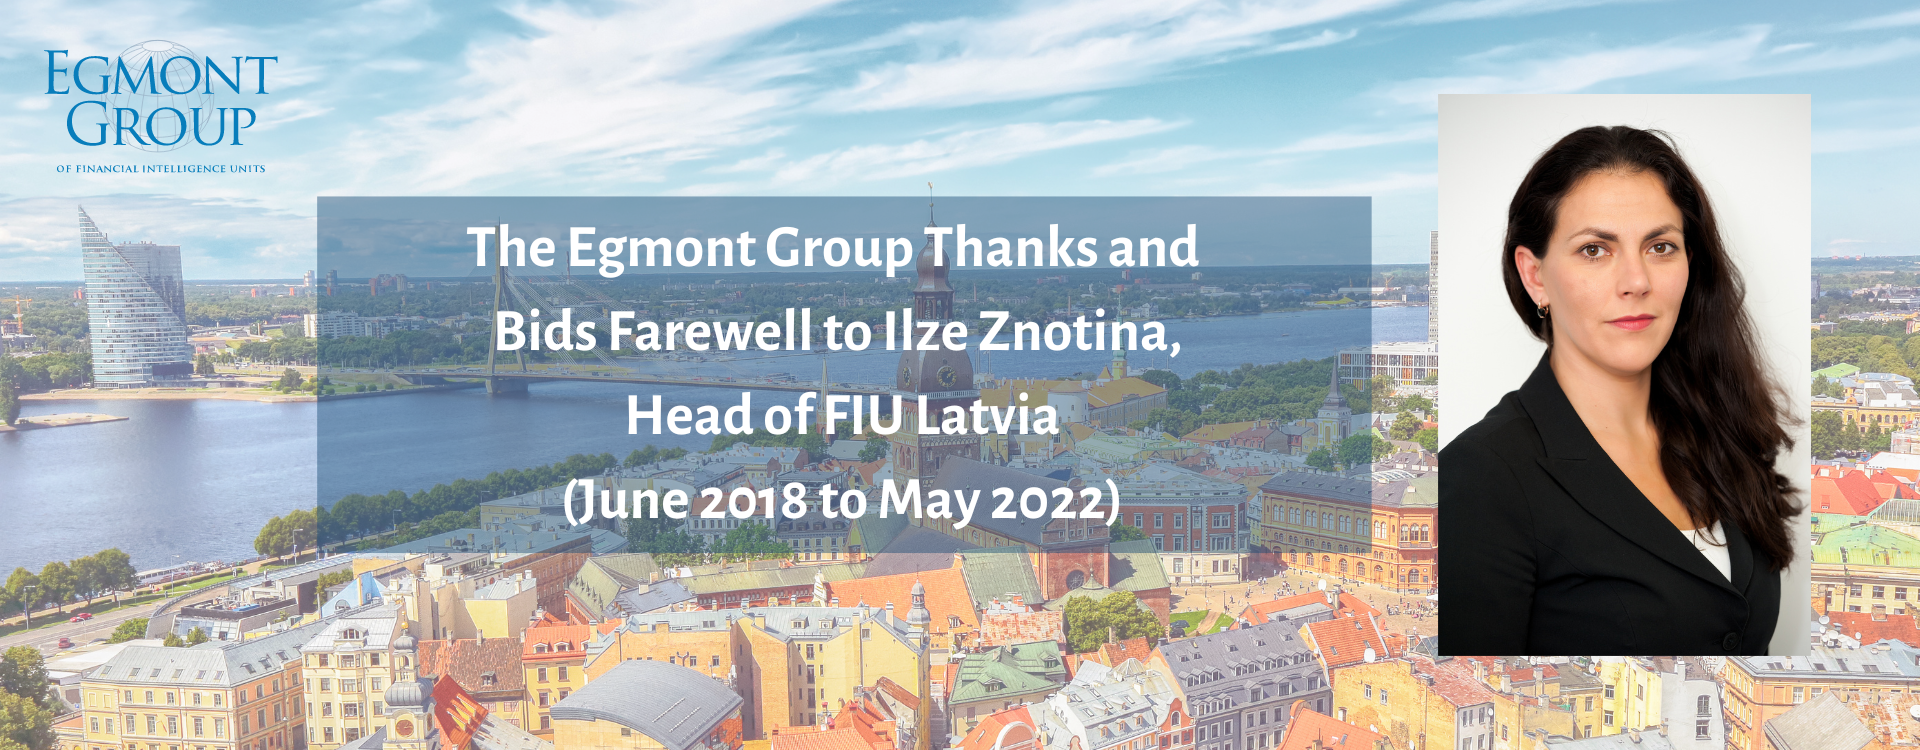 The Egmont Group Thanks and Bids Farewell to  Ilze Znotina, Head of FIU Latvia (June 2018 to May 2022)